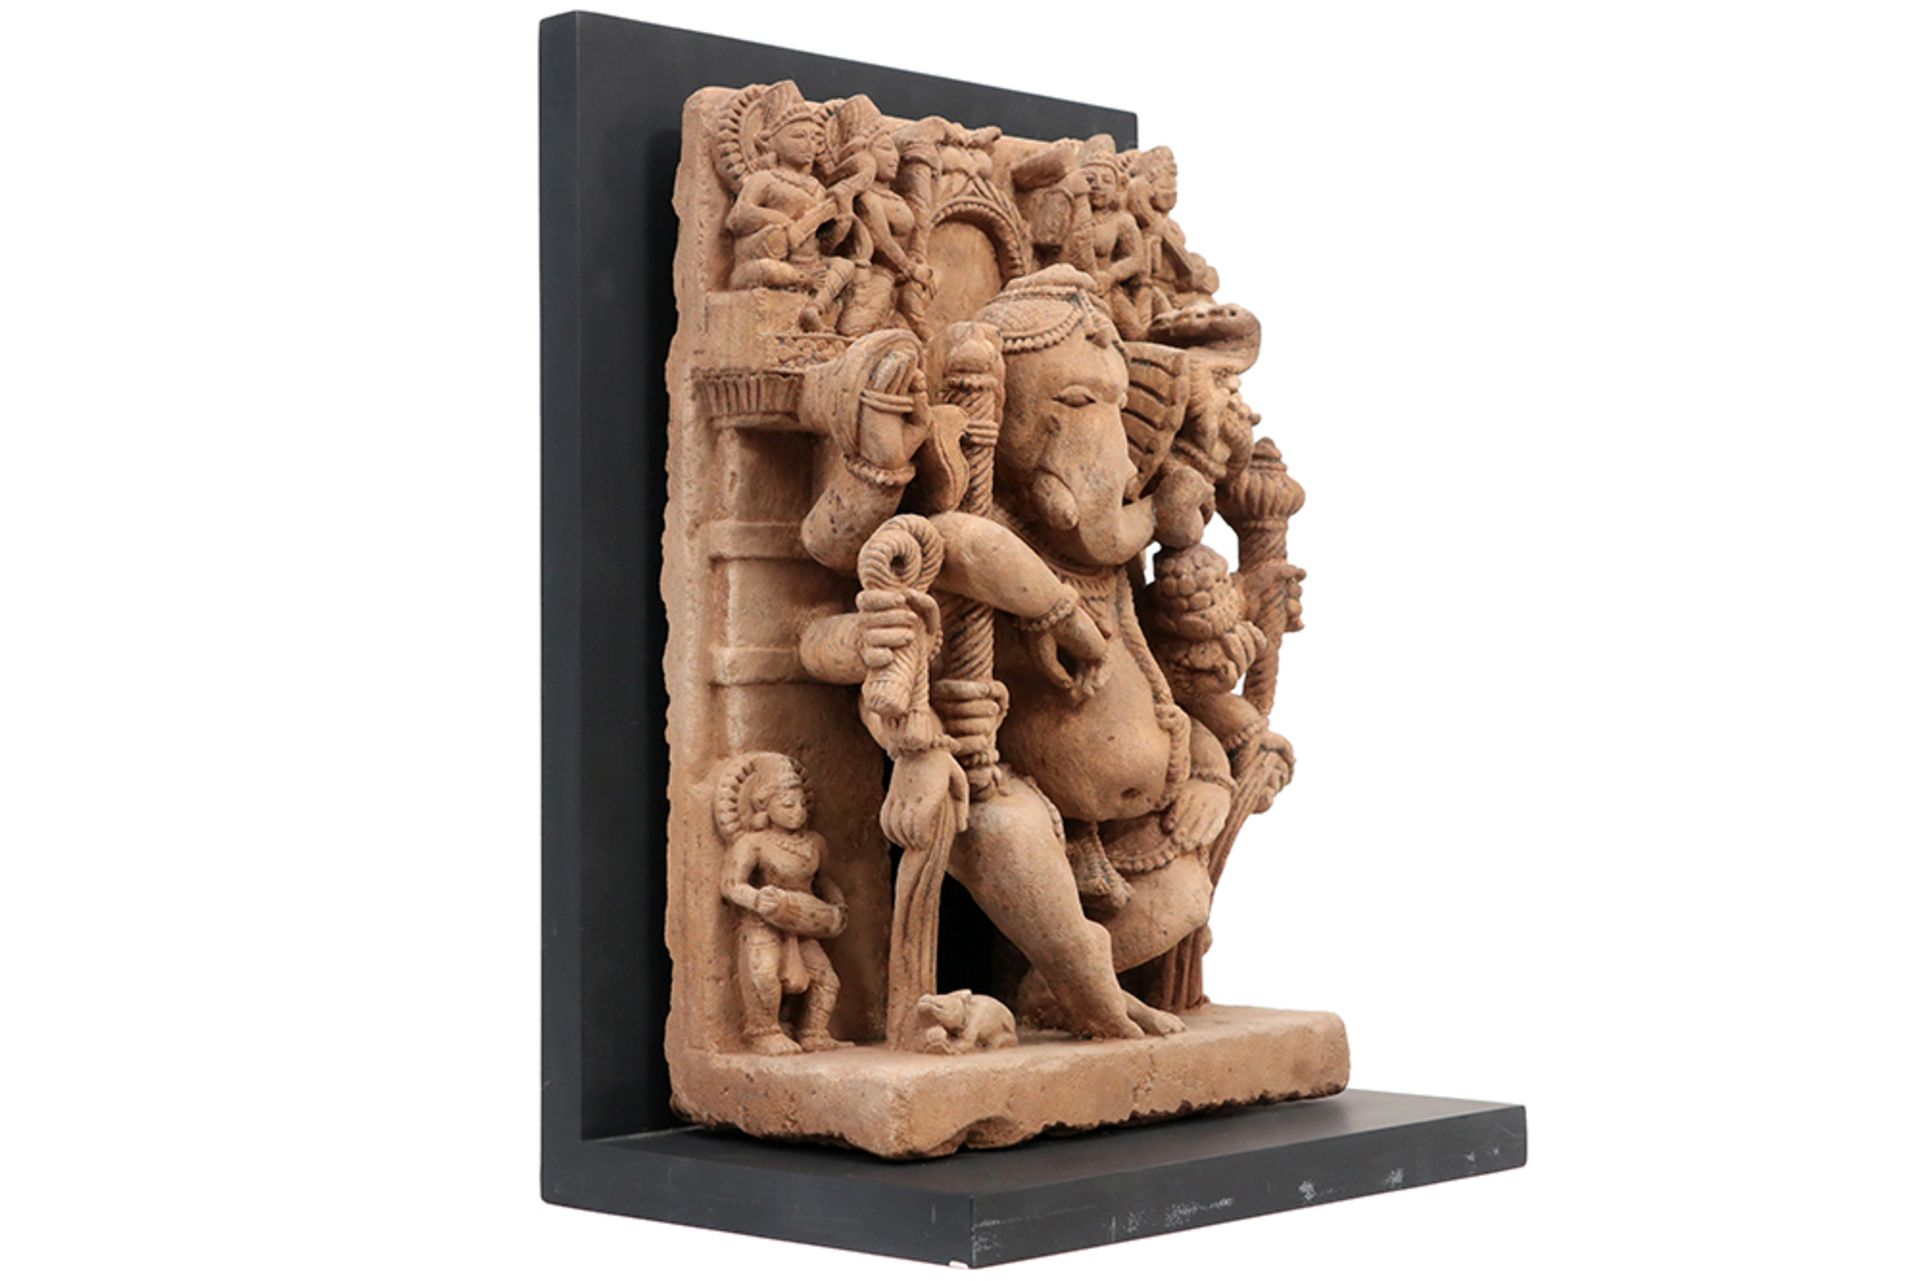 10th/11th Cent. Indian Madhya Pradesh "Ganesha" sculpture in sandstone || INDIA / MADHYA PRADESH - - Image 2 of 4